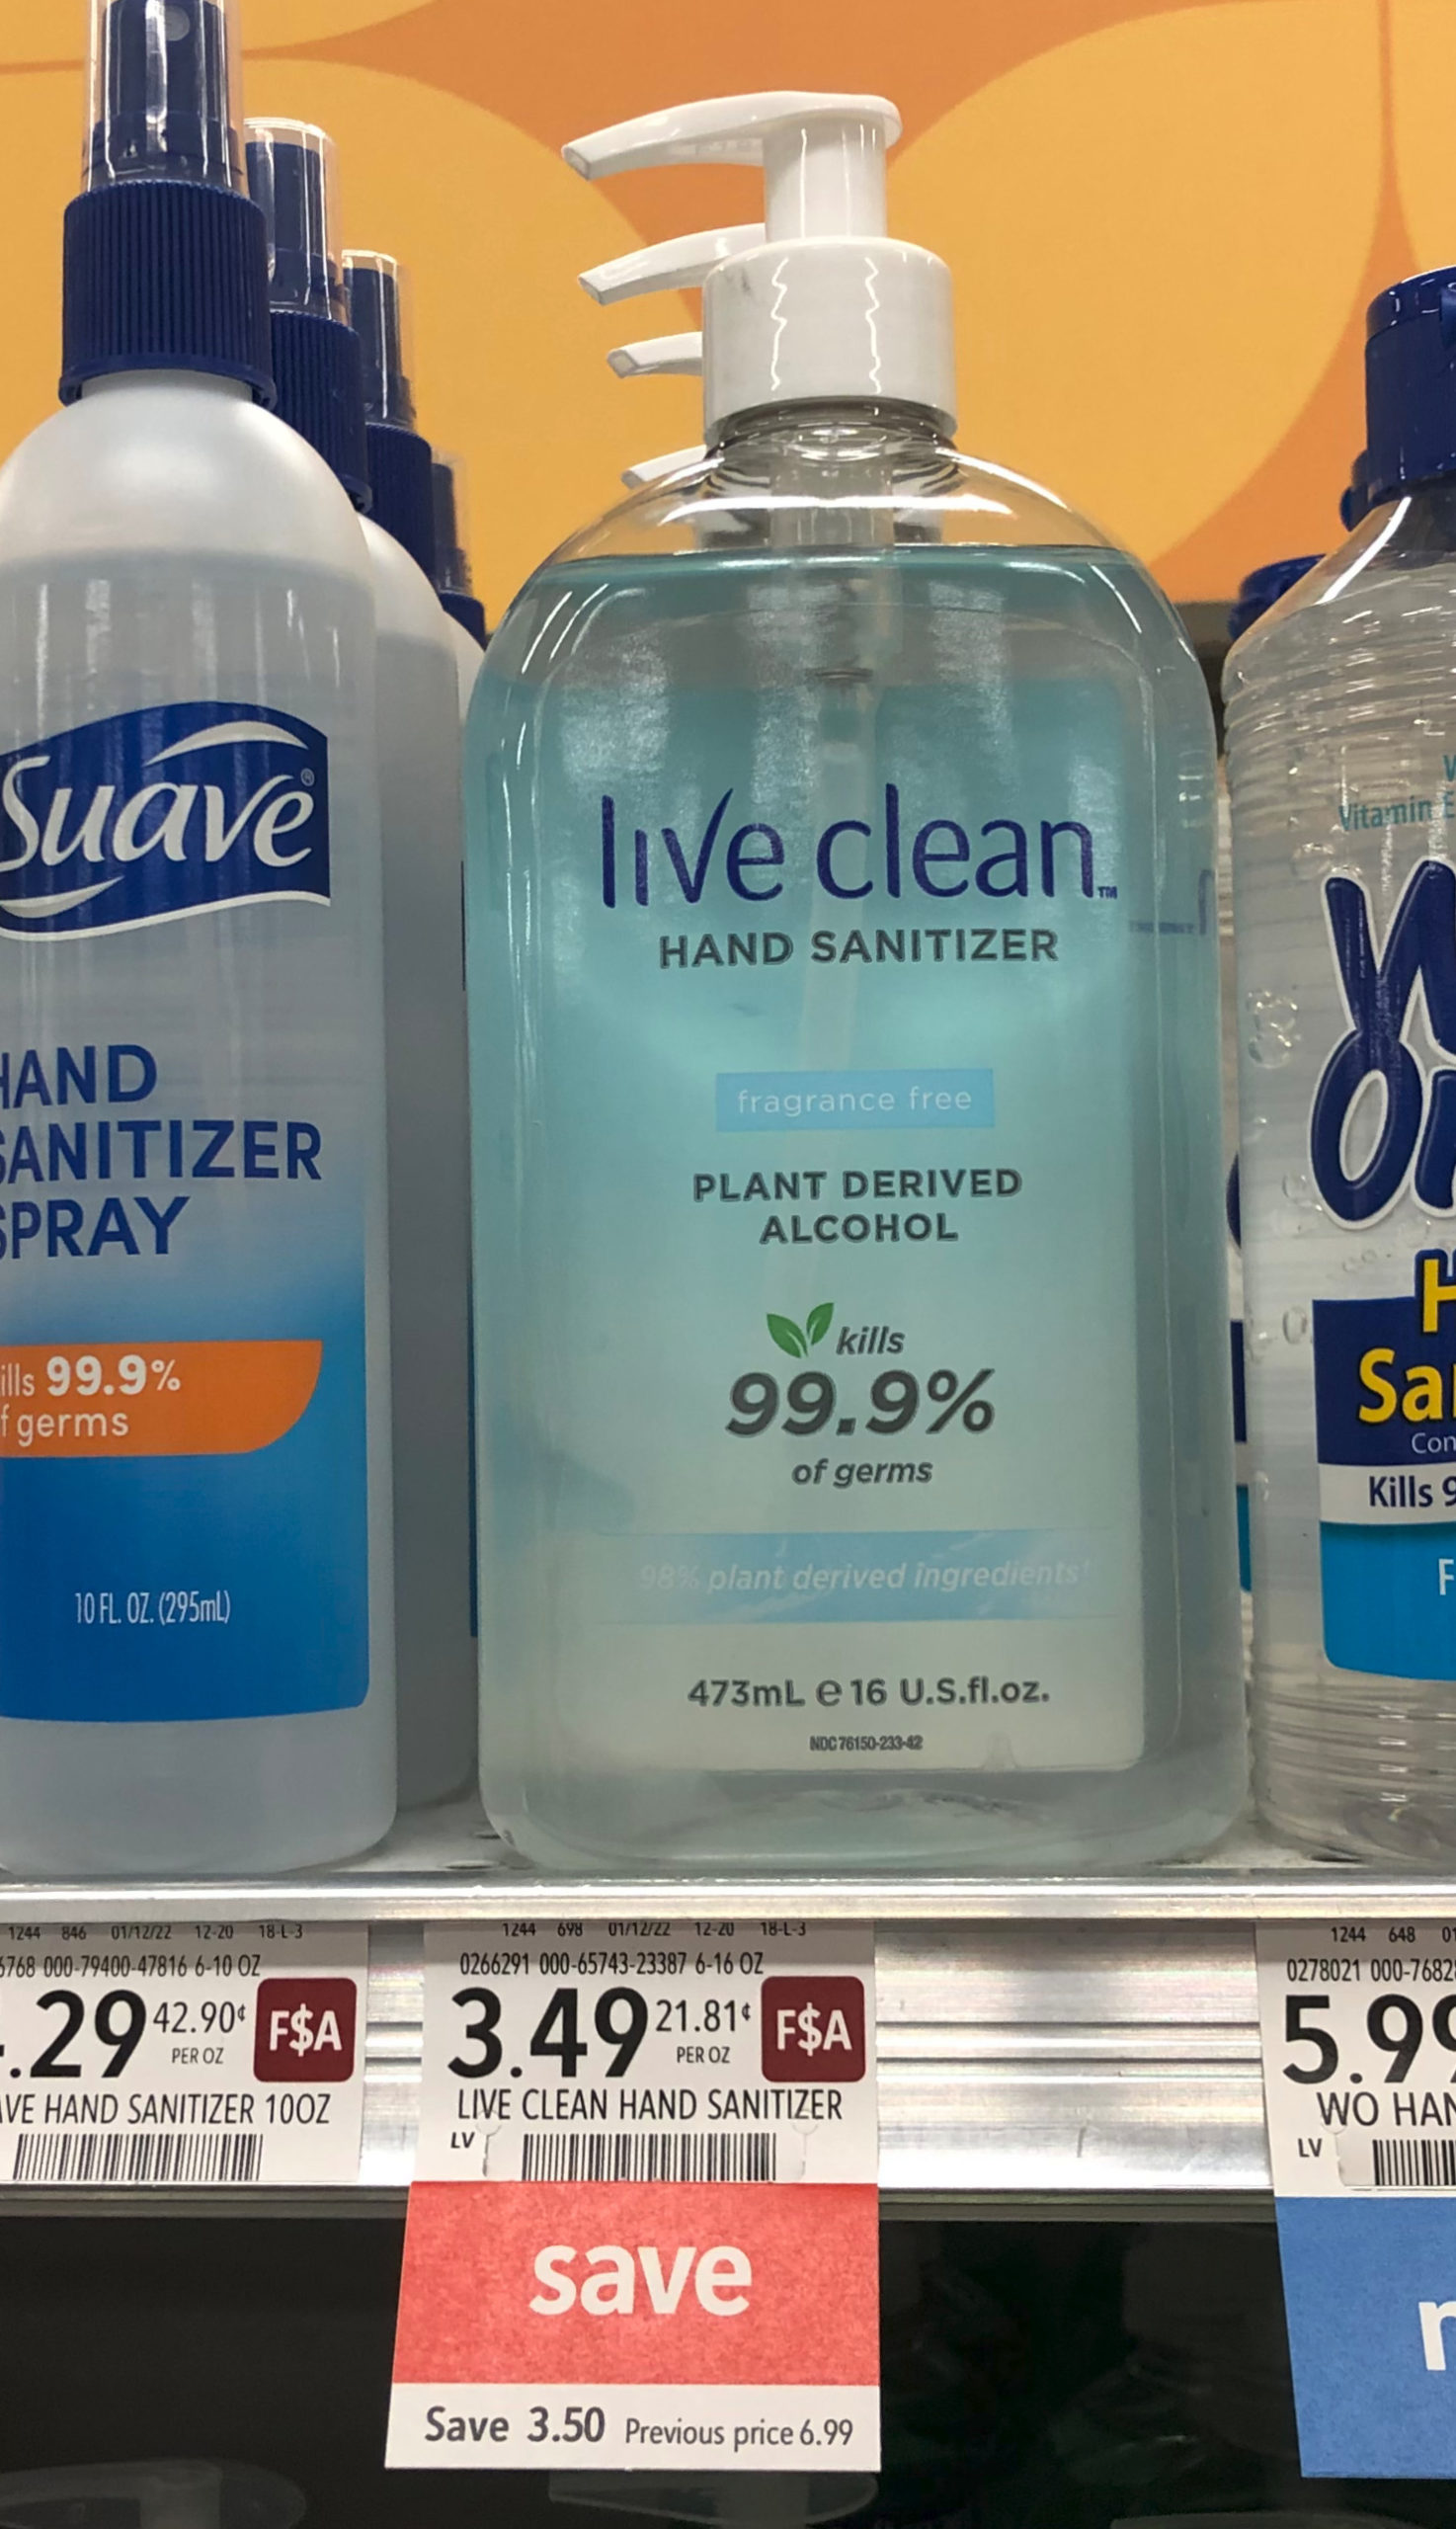 Live Clean Hand Sanitizer Just $3.49 - Half Price At Publix on I Heart Publix